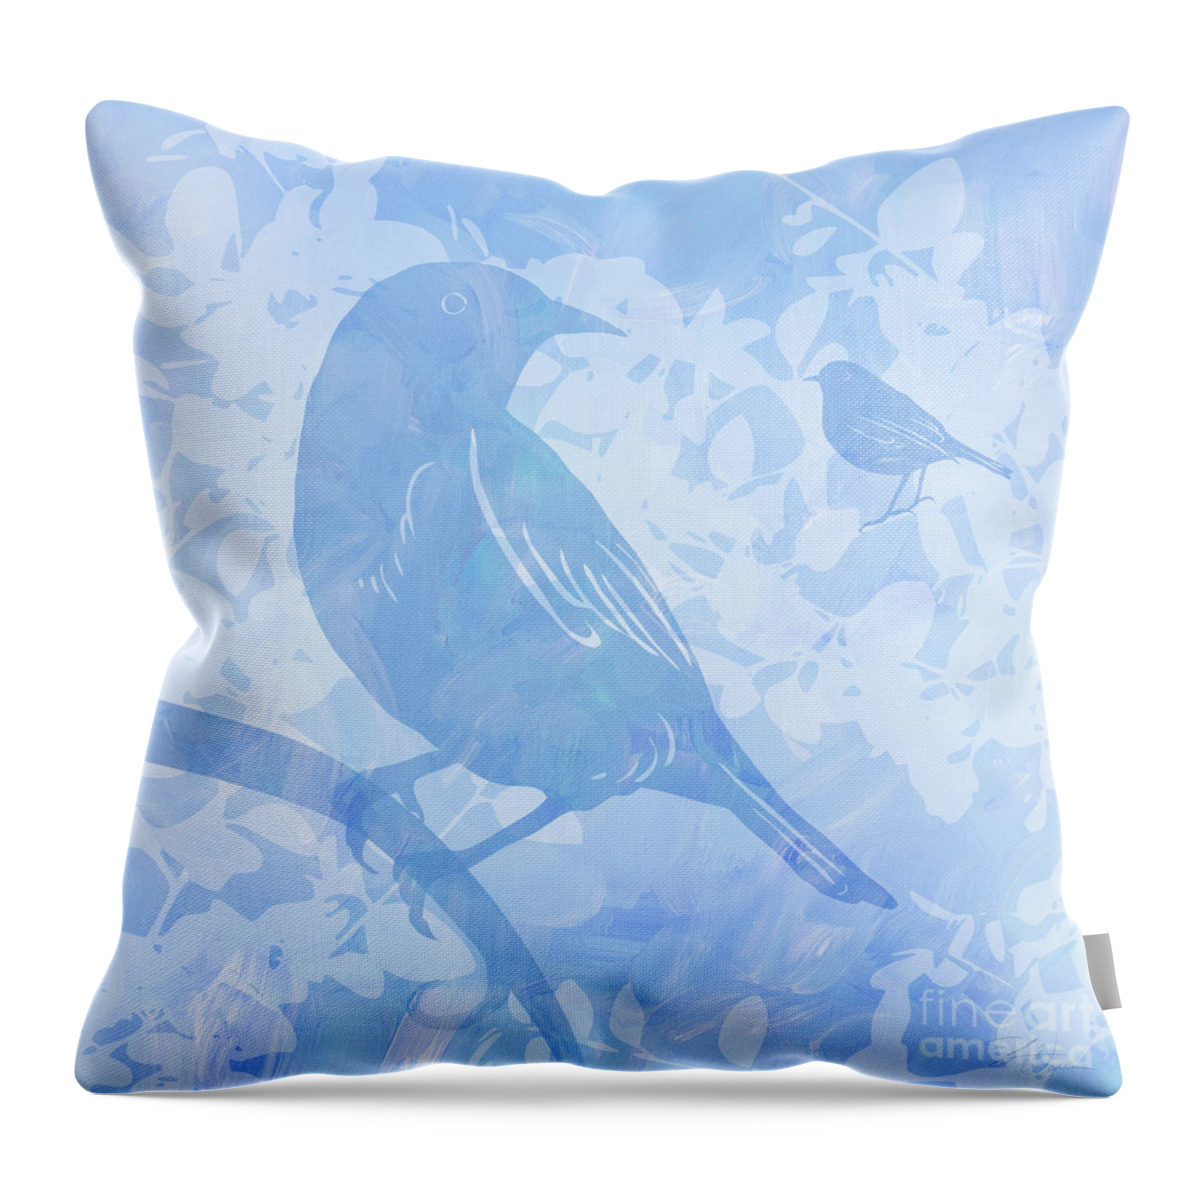 Birds Throw Pillow featuring the mixed media Tree Birds I by Shari Warren